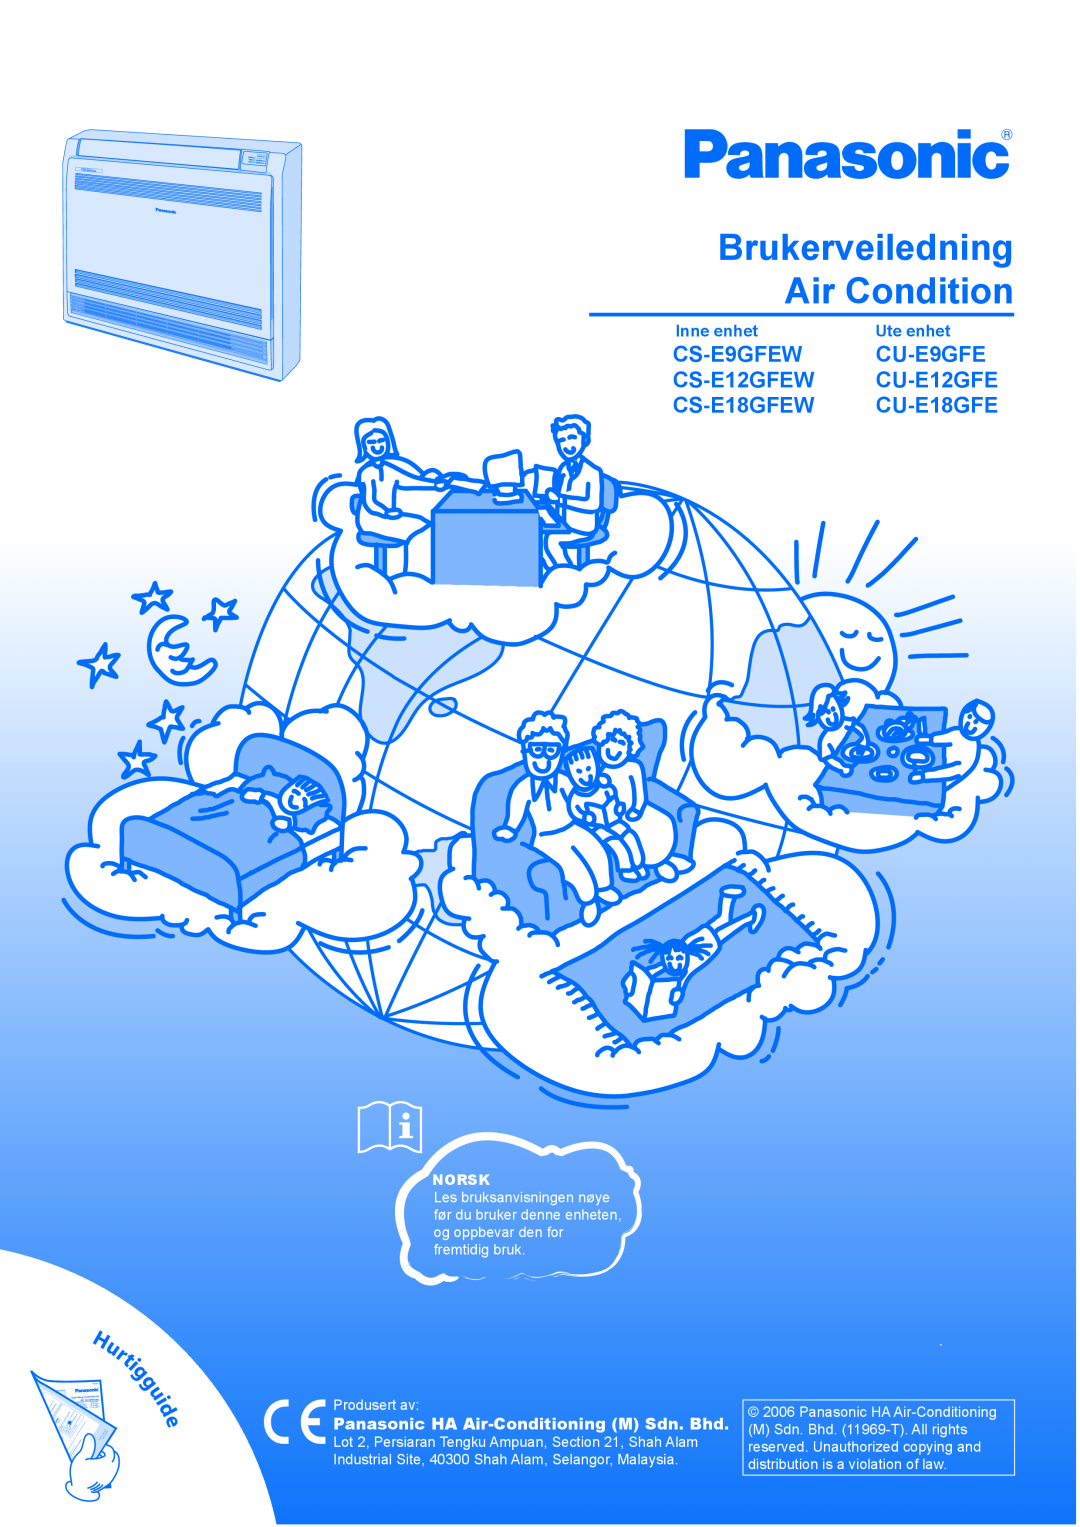 Panasonic CS-E9GKEW manual Brukerveiledning Air Condition, Inne enhet, Ute enhet, Panasonic HA Air-ConditioningM Sdn. Bhd 